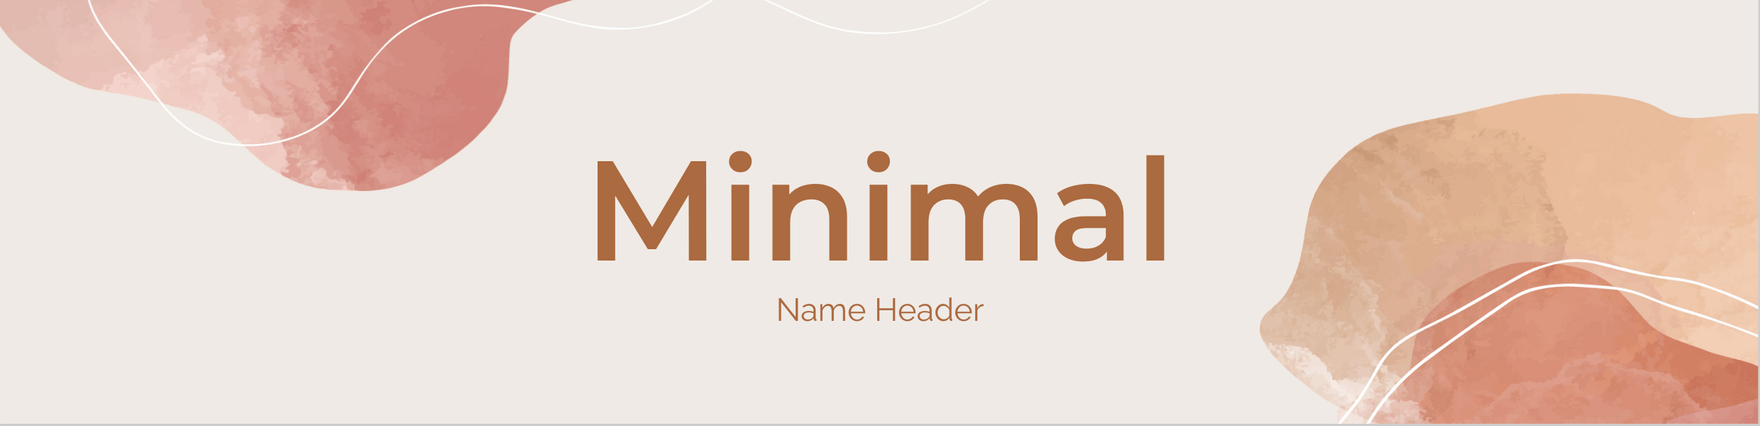 Minimal Name Header Template